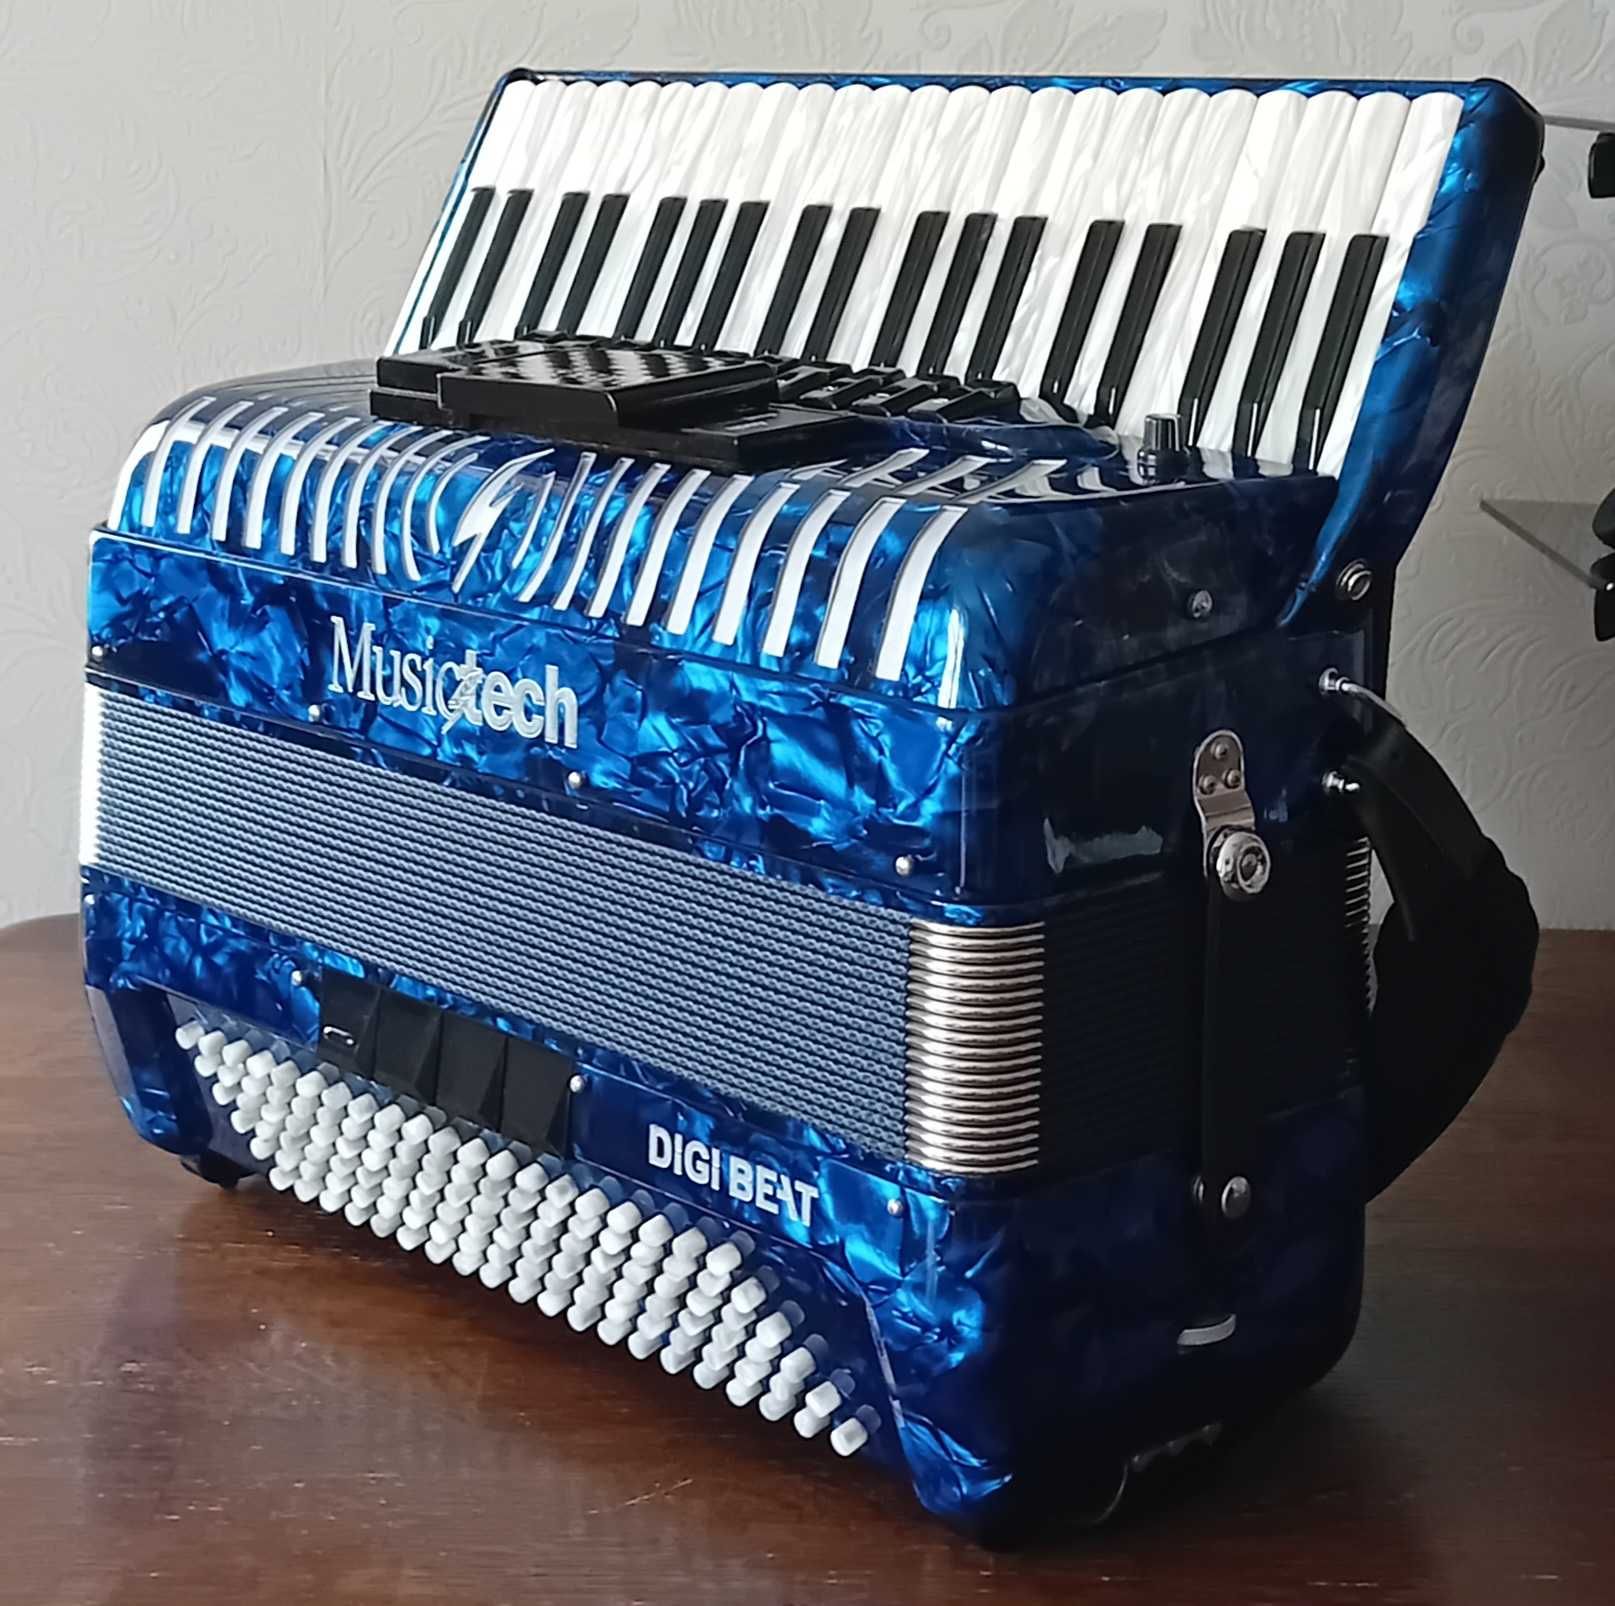 acordeon  midi  musictech